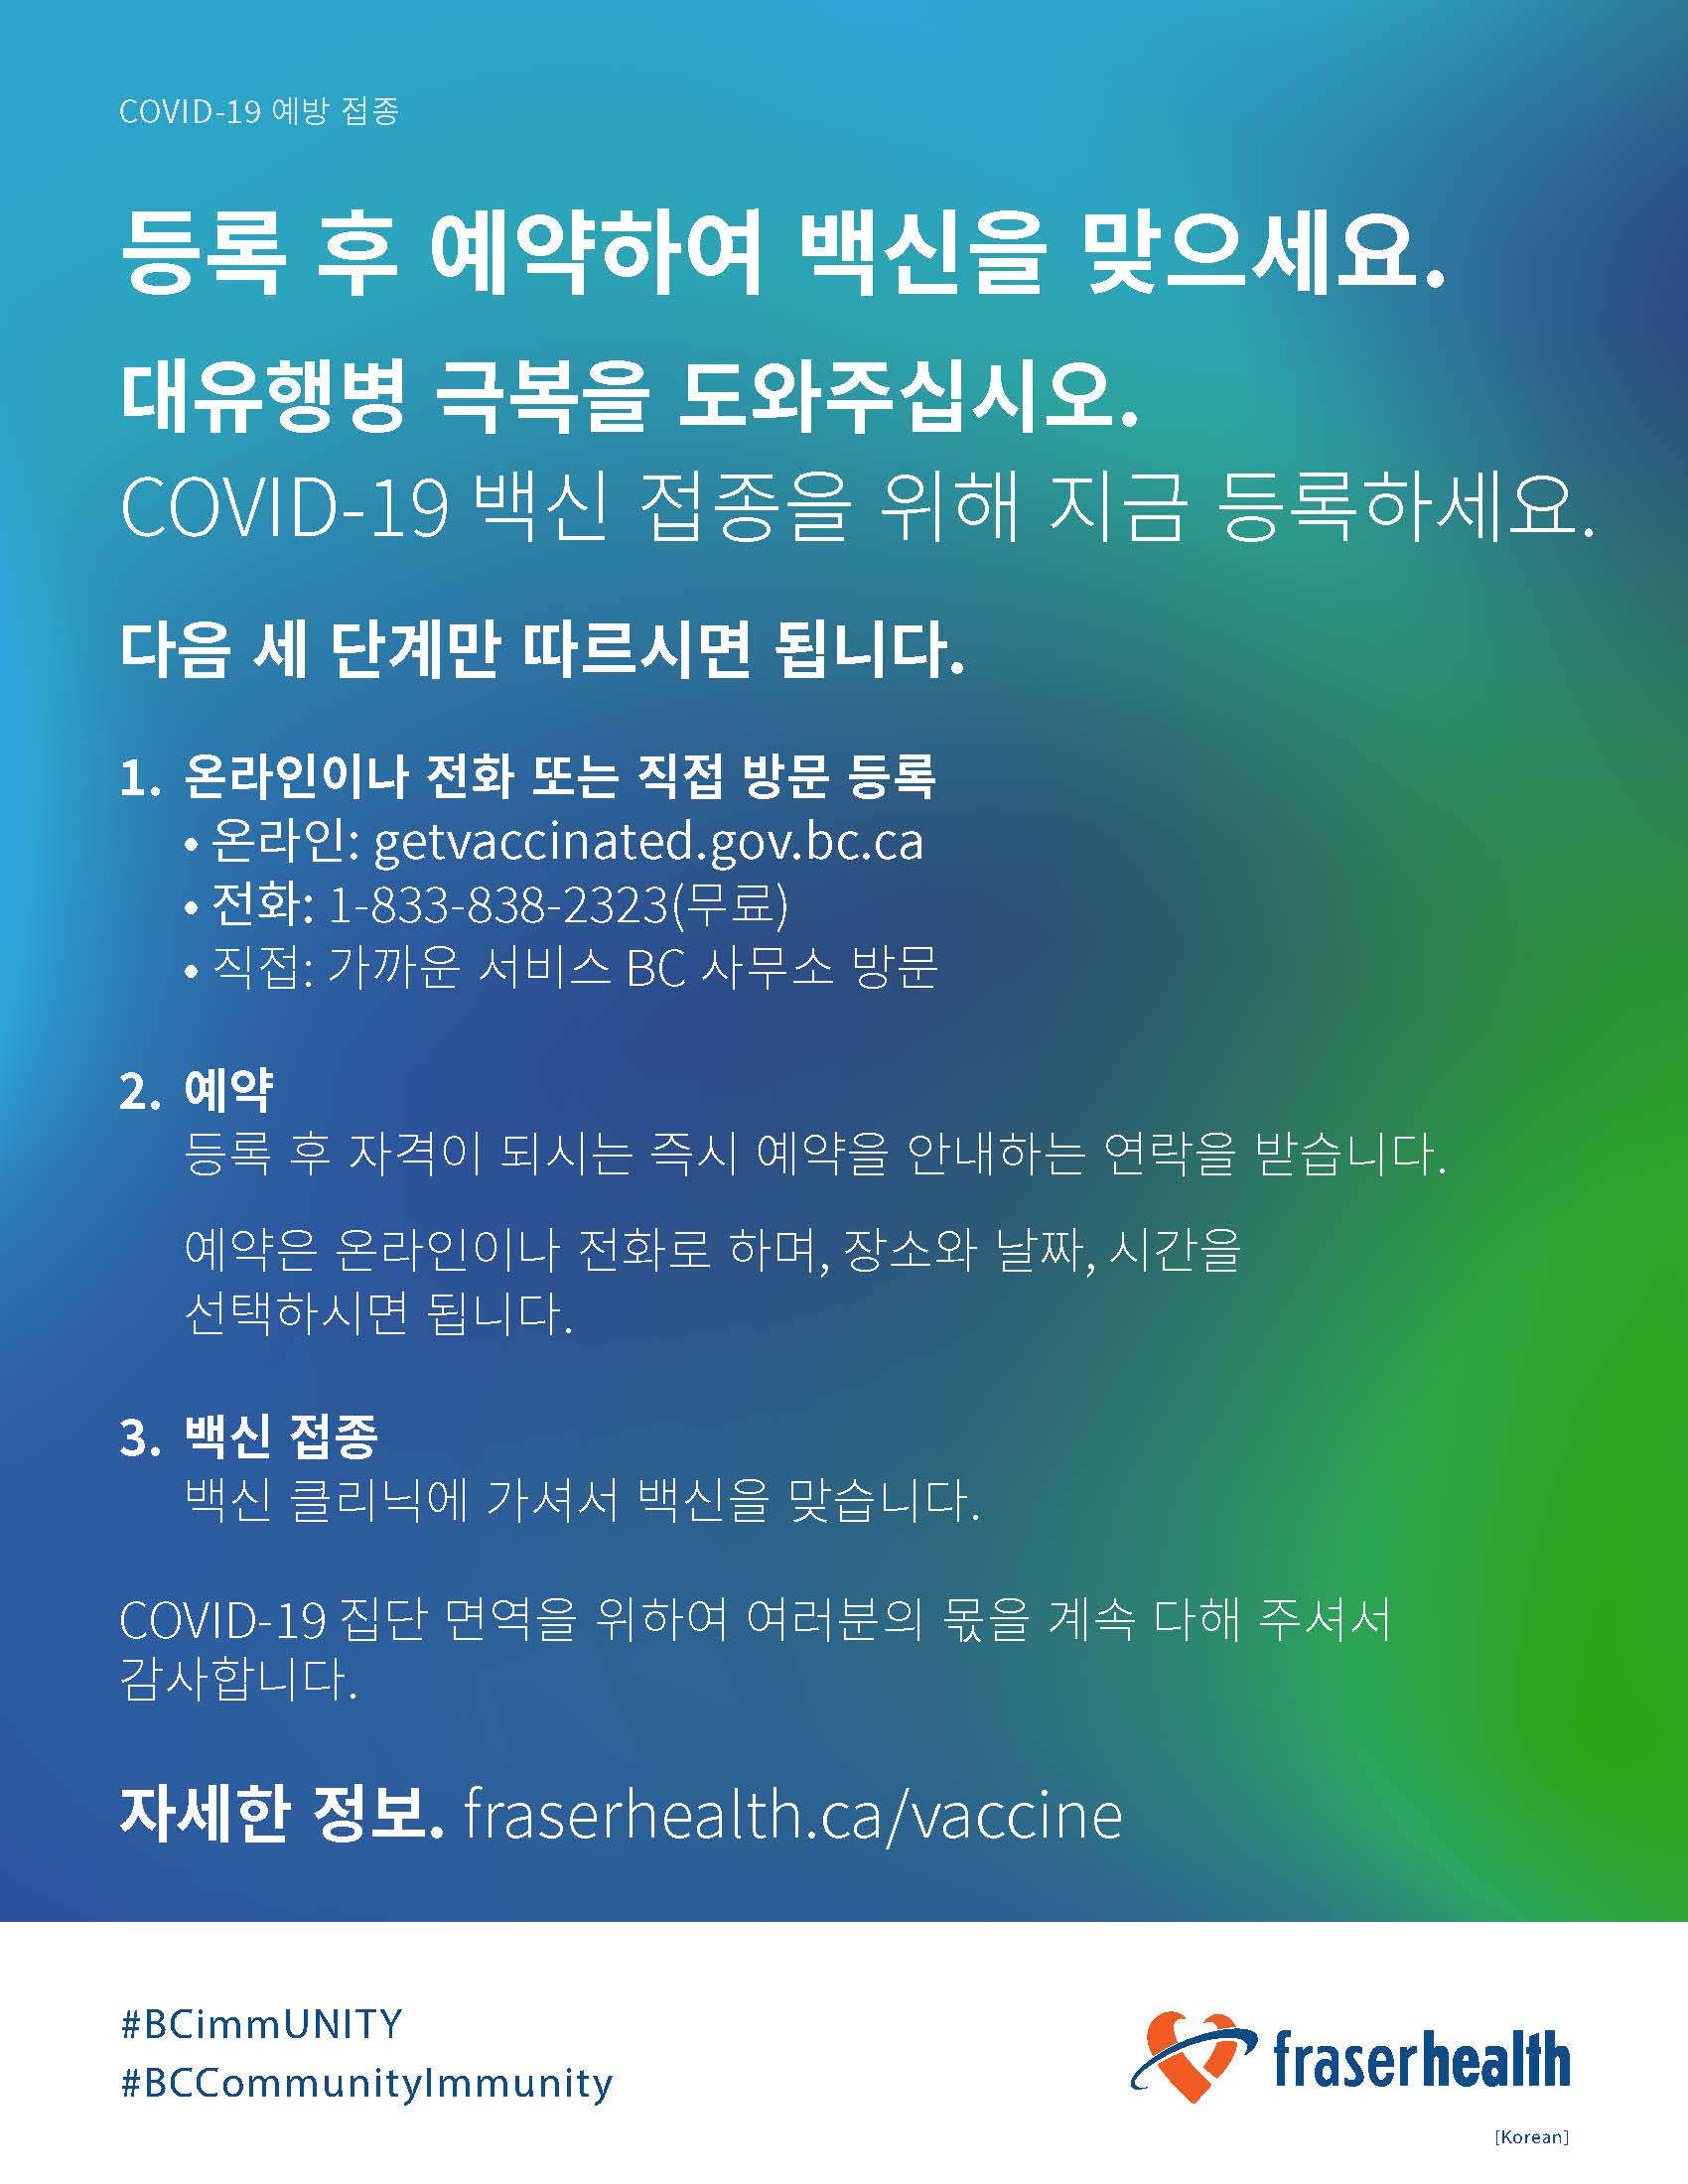 Vaccine registration for Korean in colour